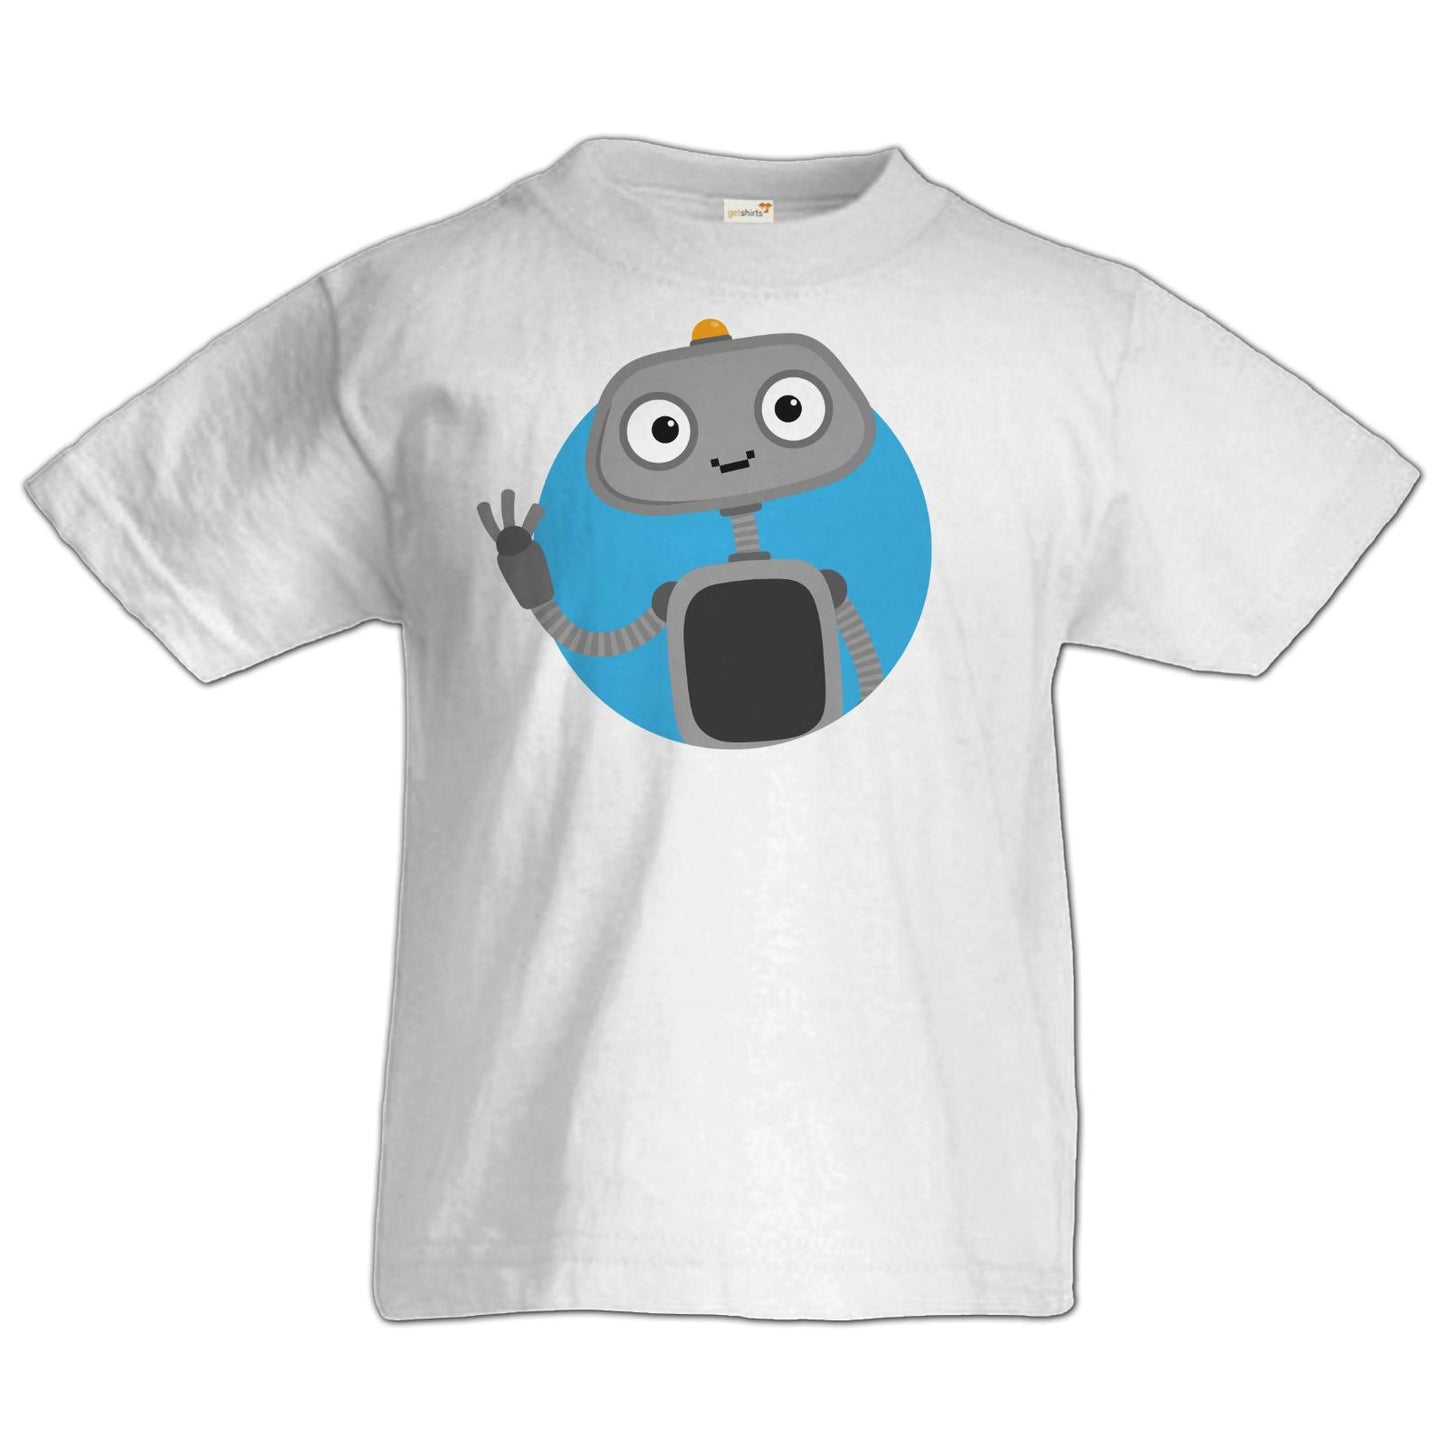 Kids T-Shirt Premium FAIR WEAR - Hallo Bo!